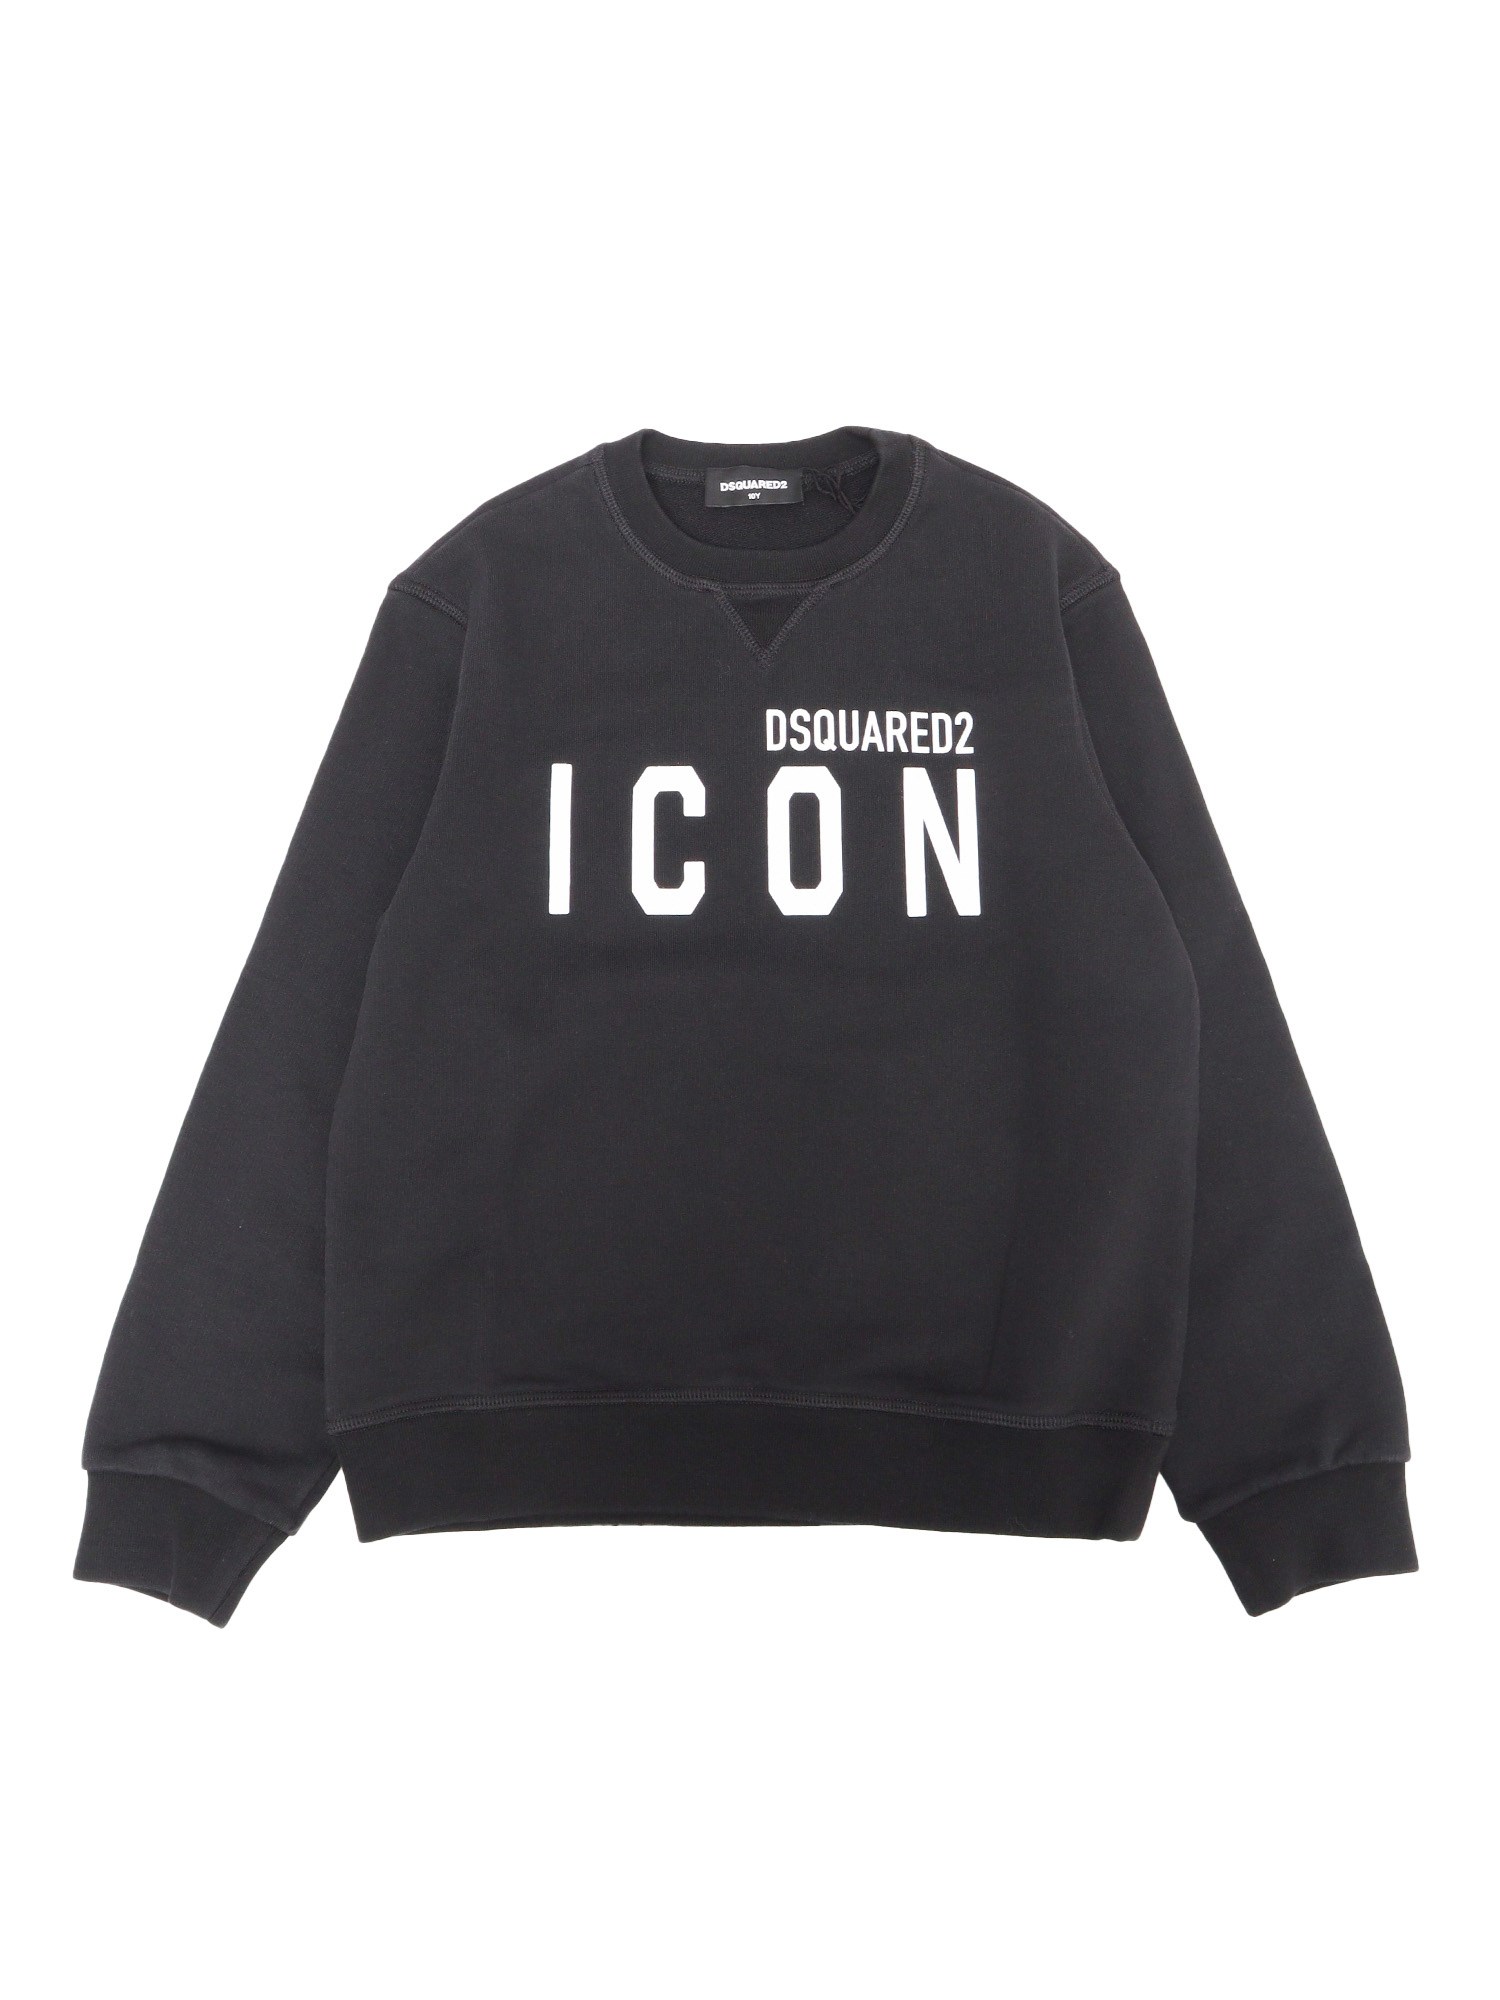 D-squared2 Kids' Icon Sweatshirt In Black